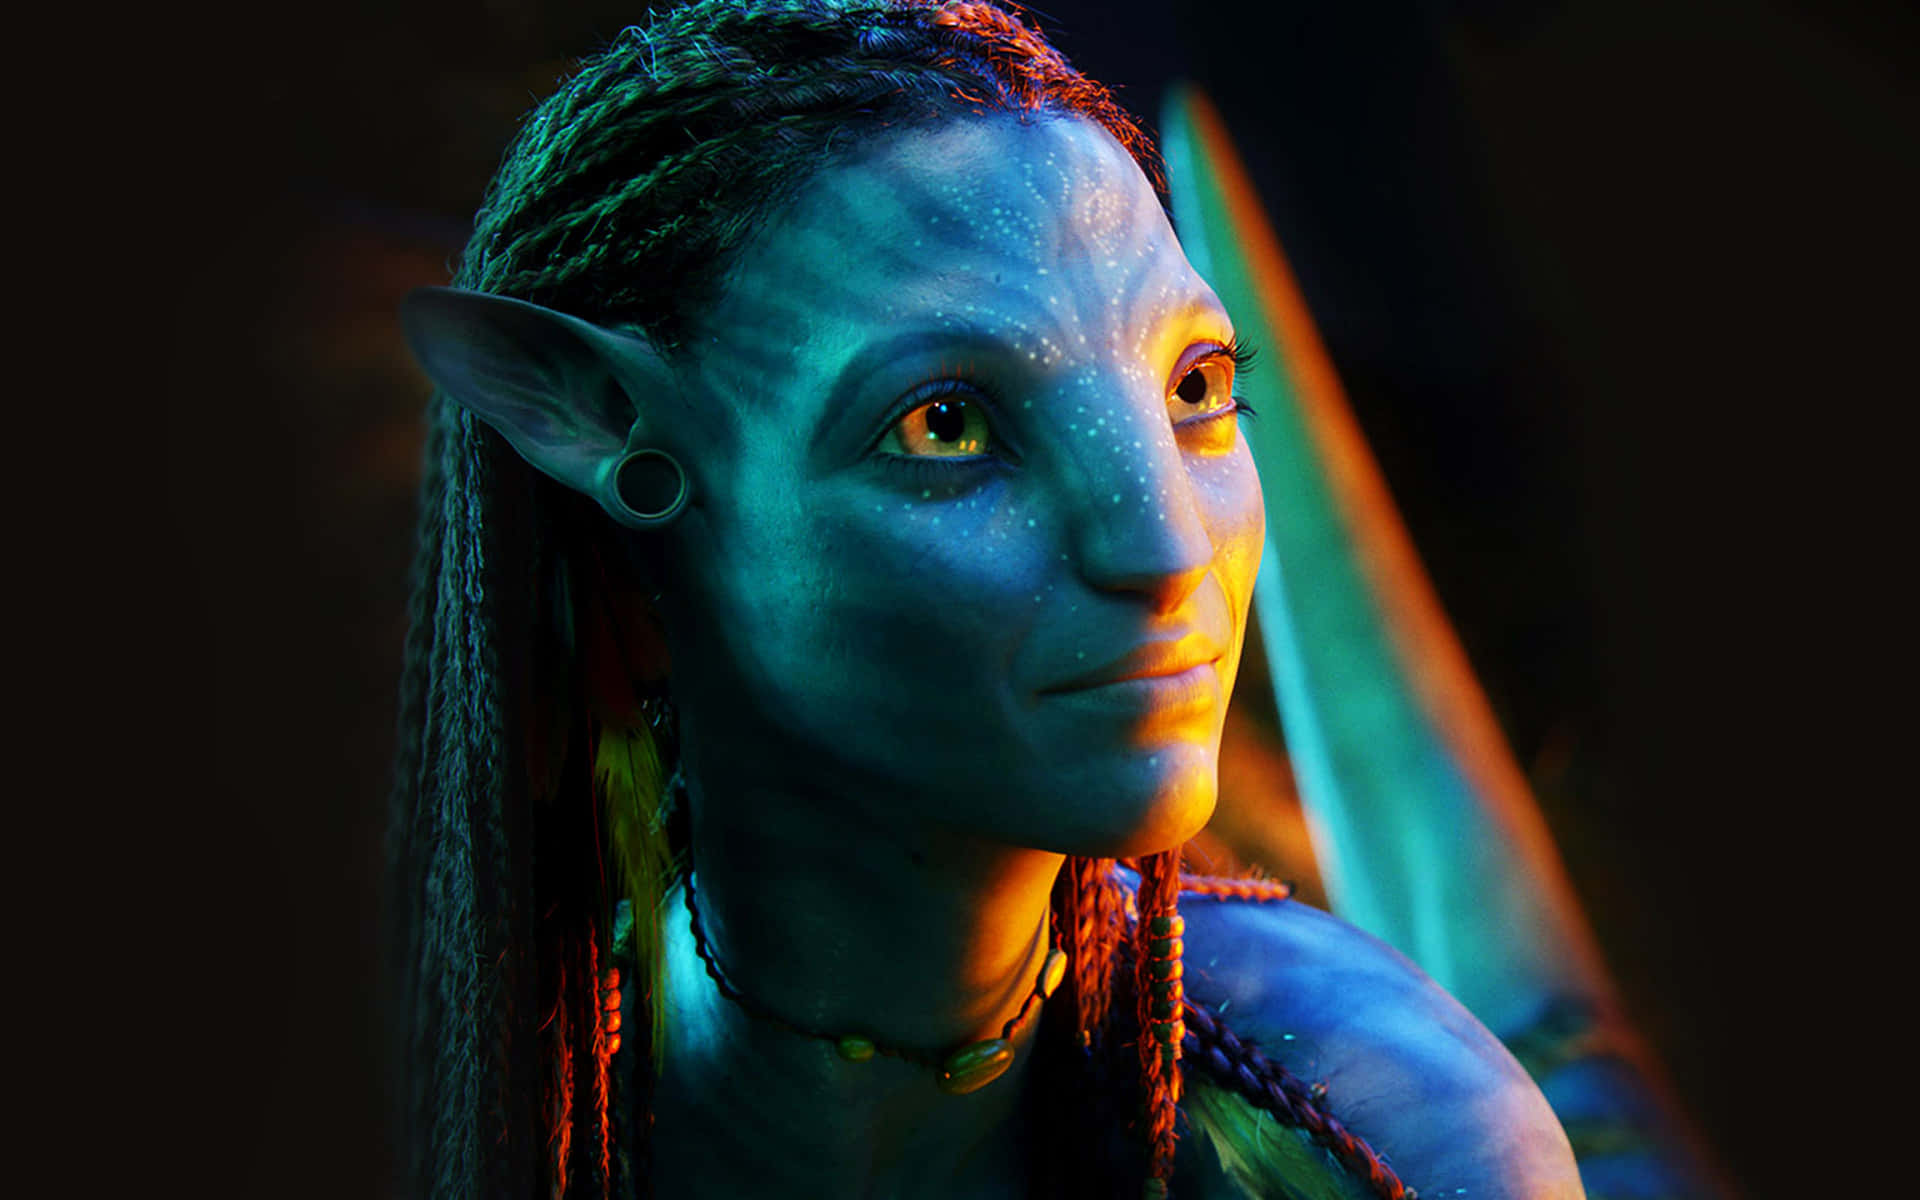 Avatar Background